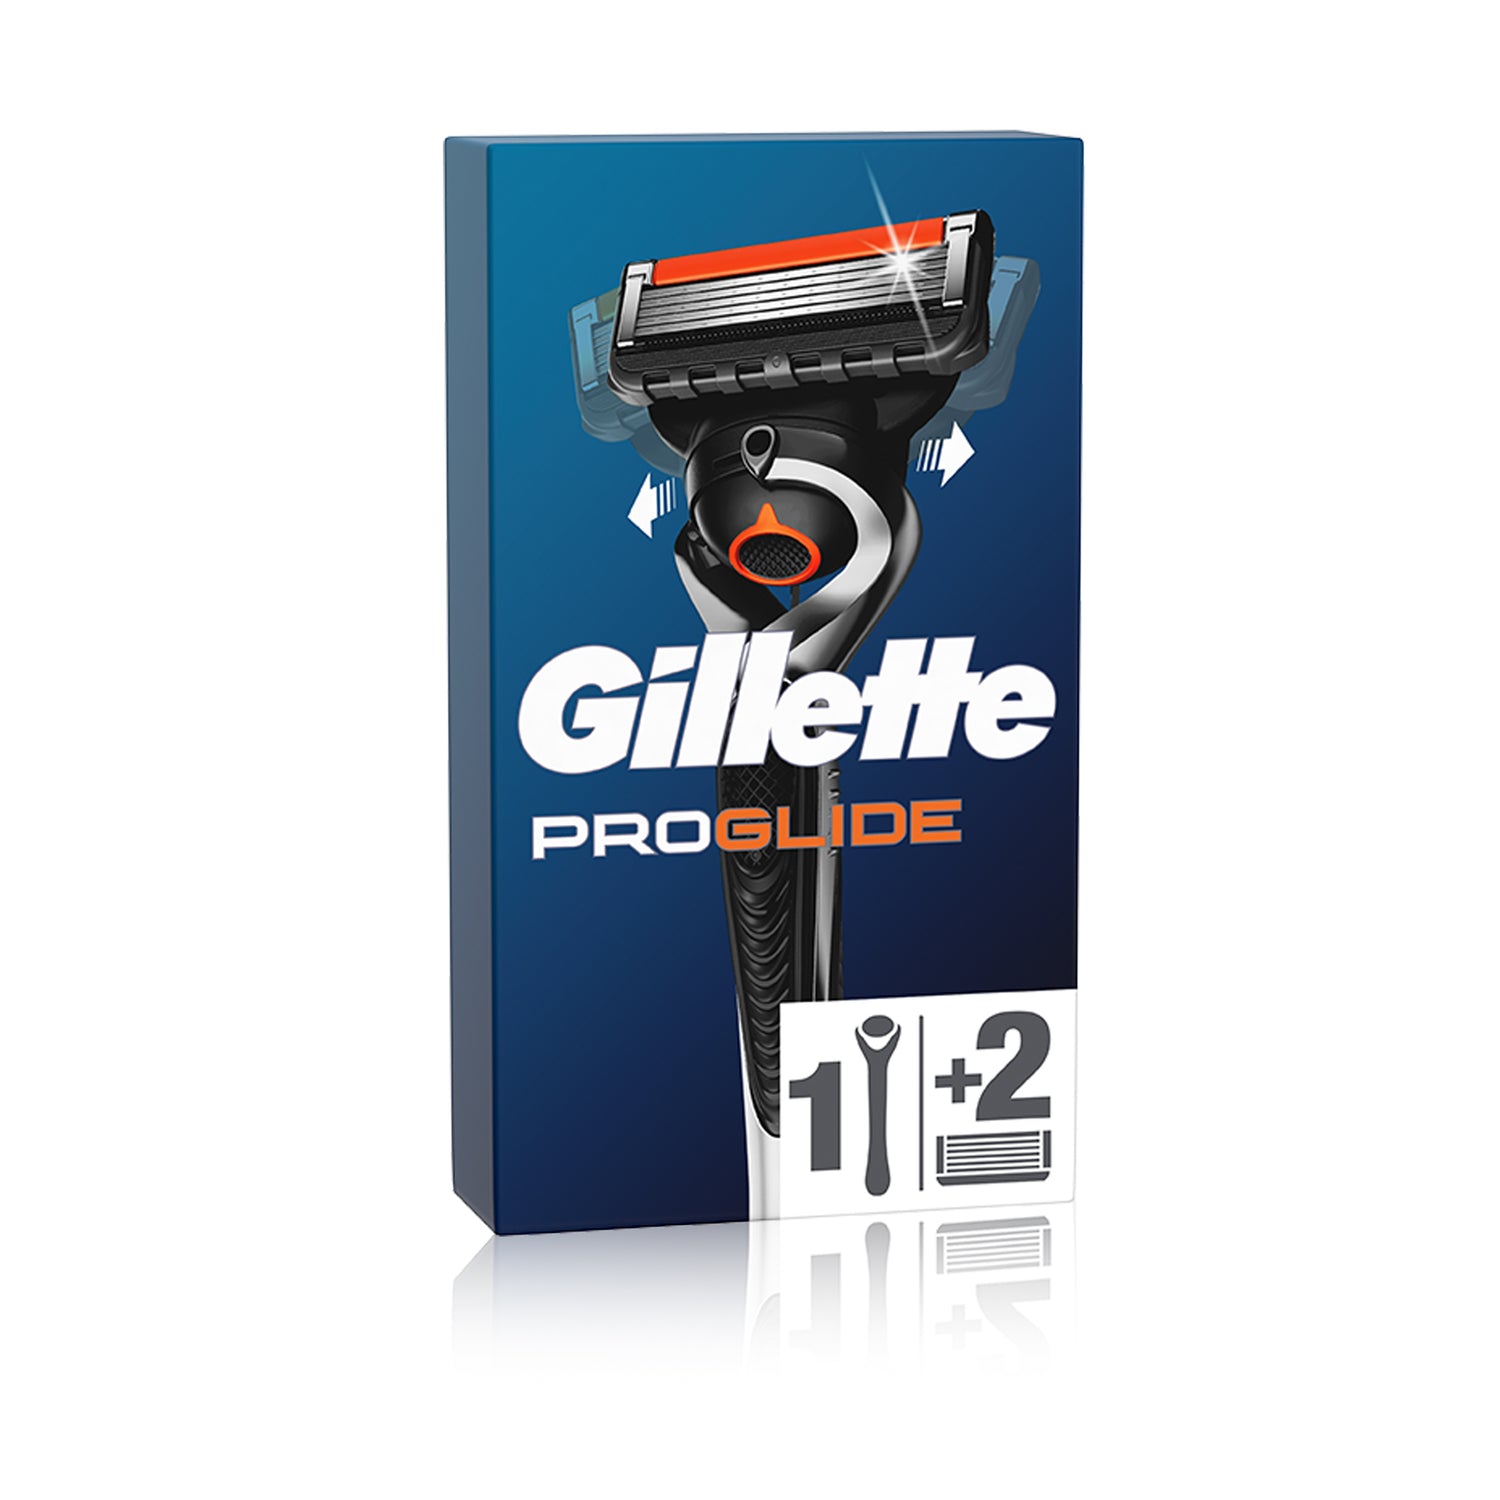 Gillette Proglide Batcharing Machine With 2 Relages